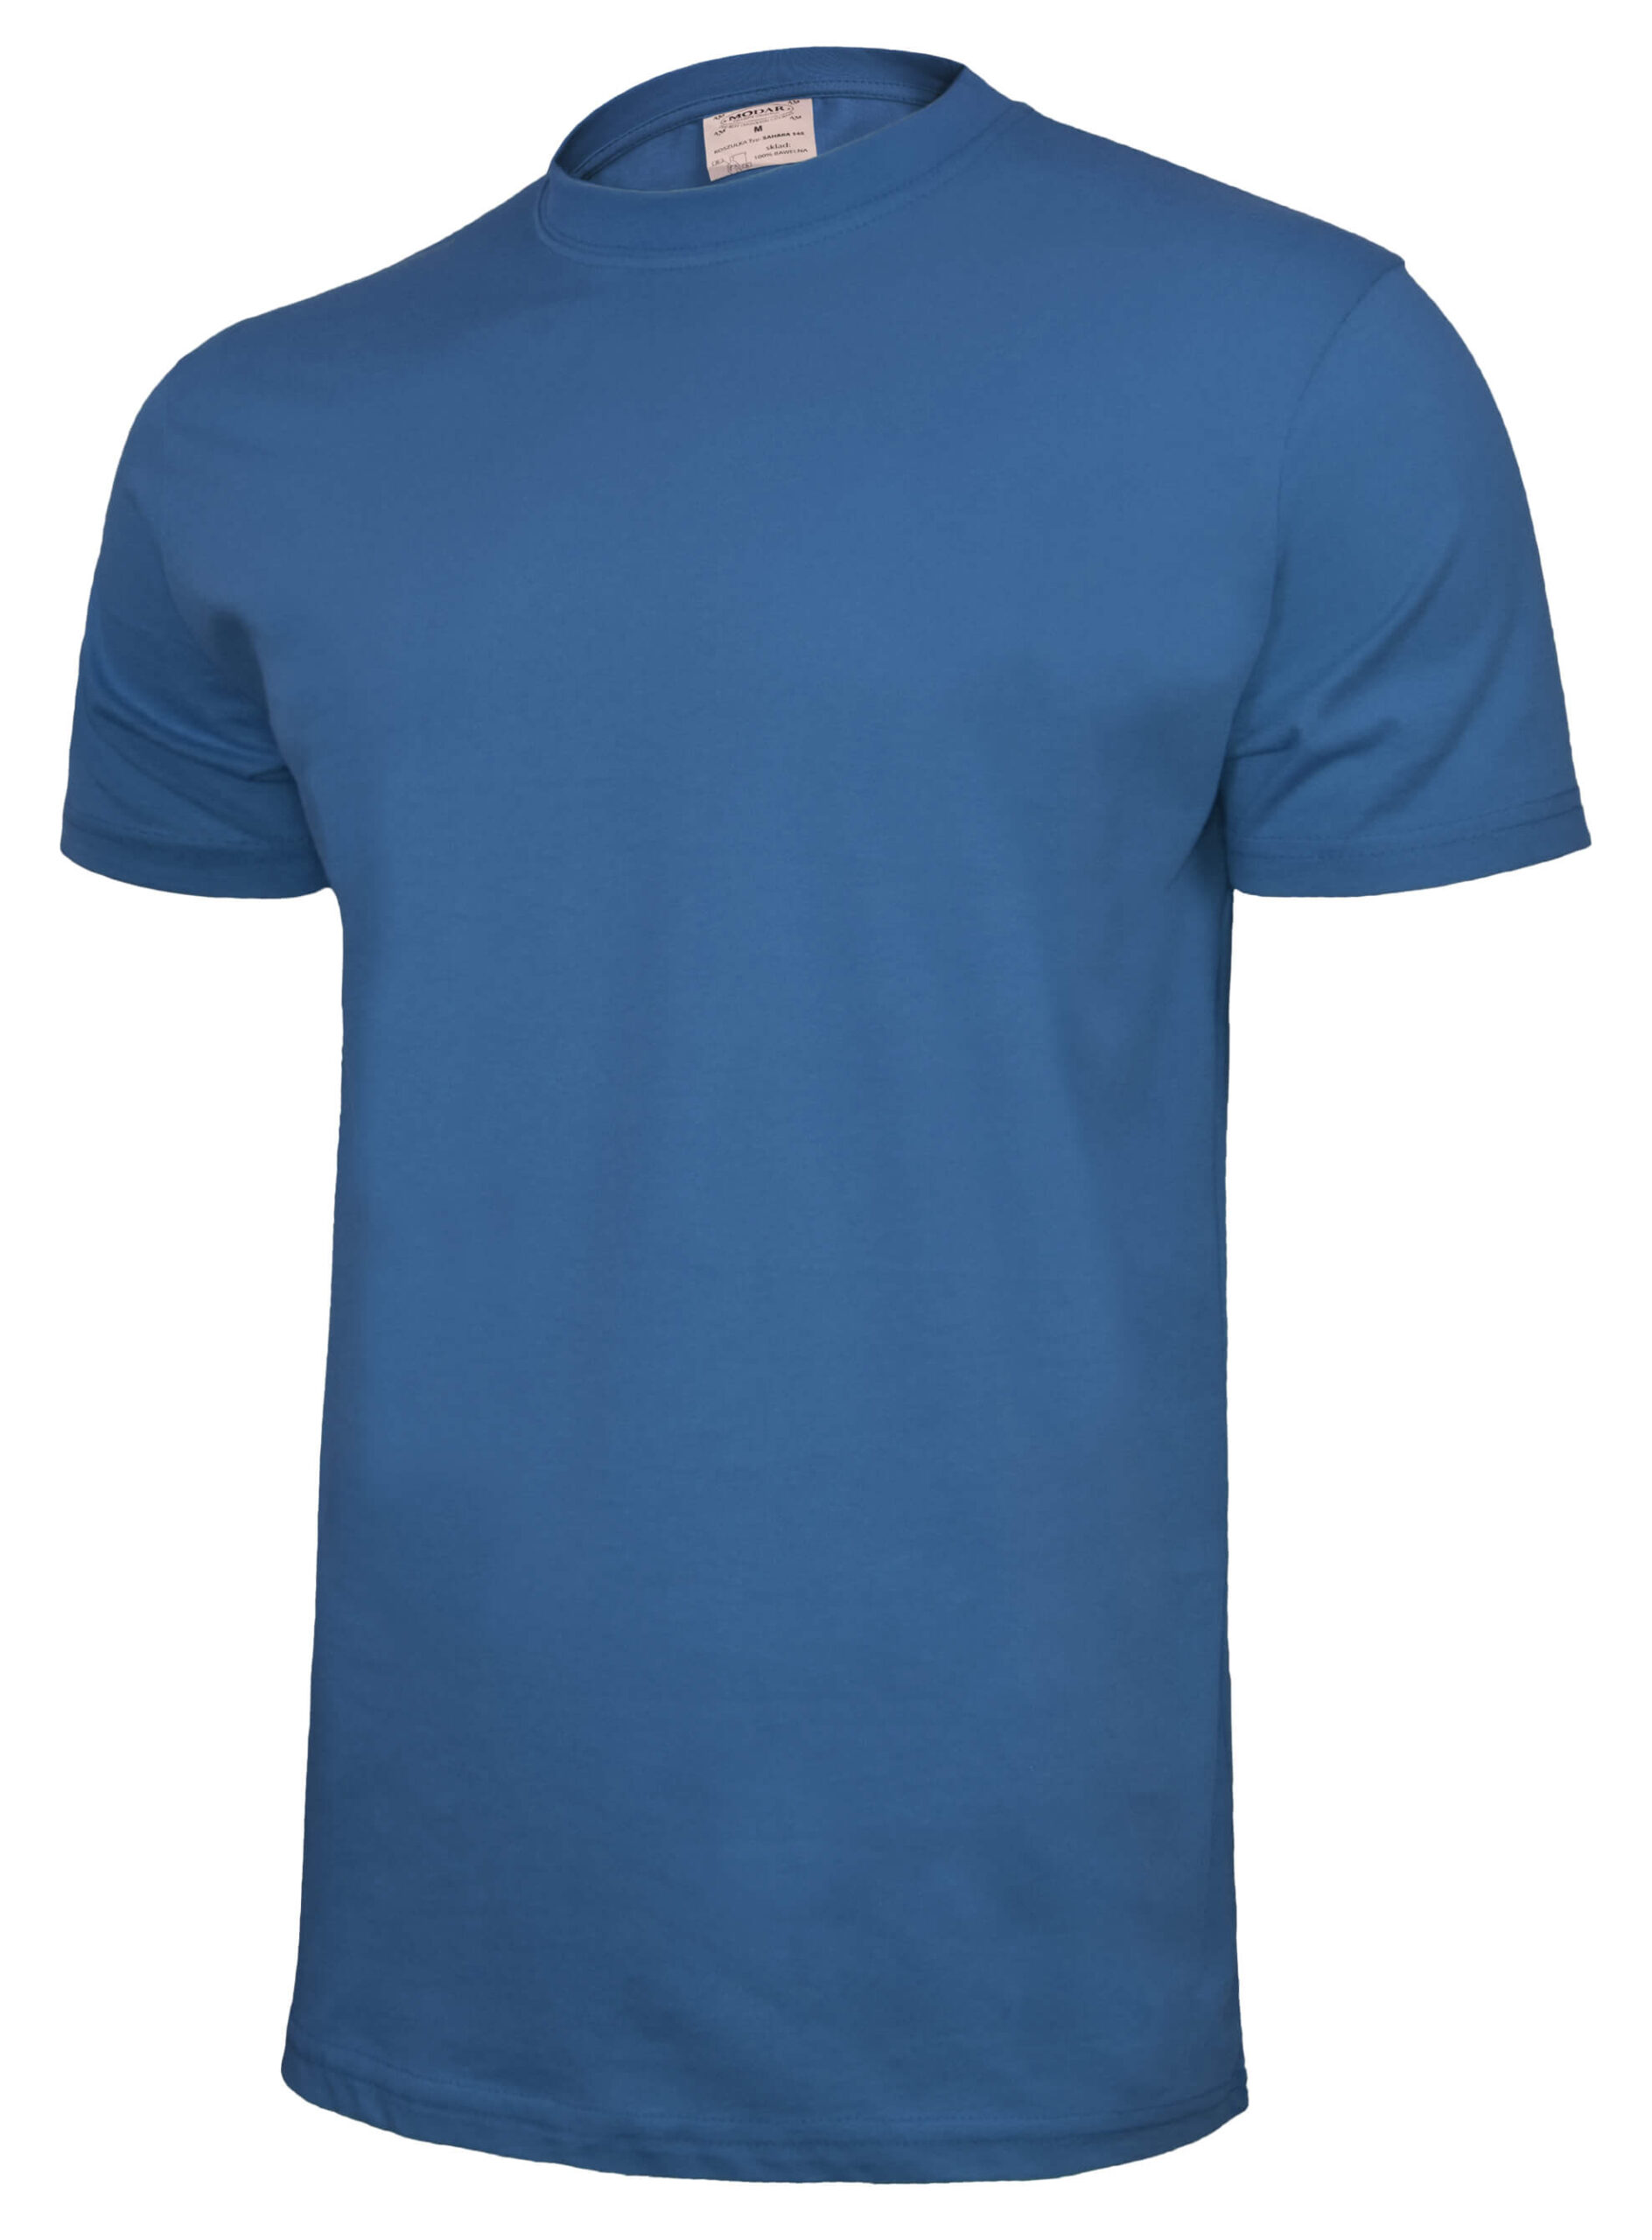 Blue T-Shirt - Cargoland Workwear